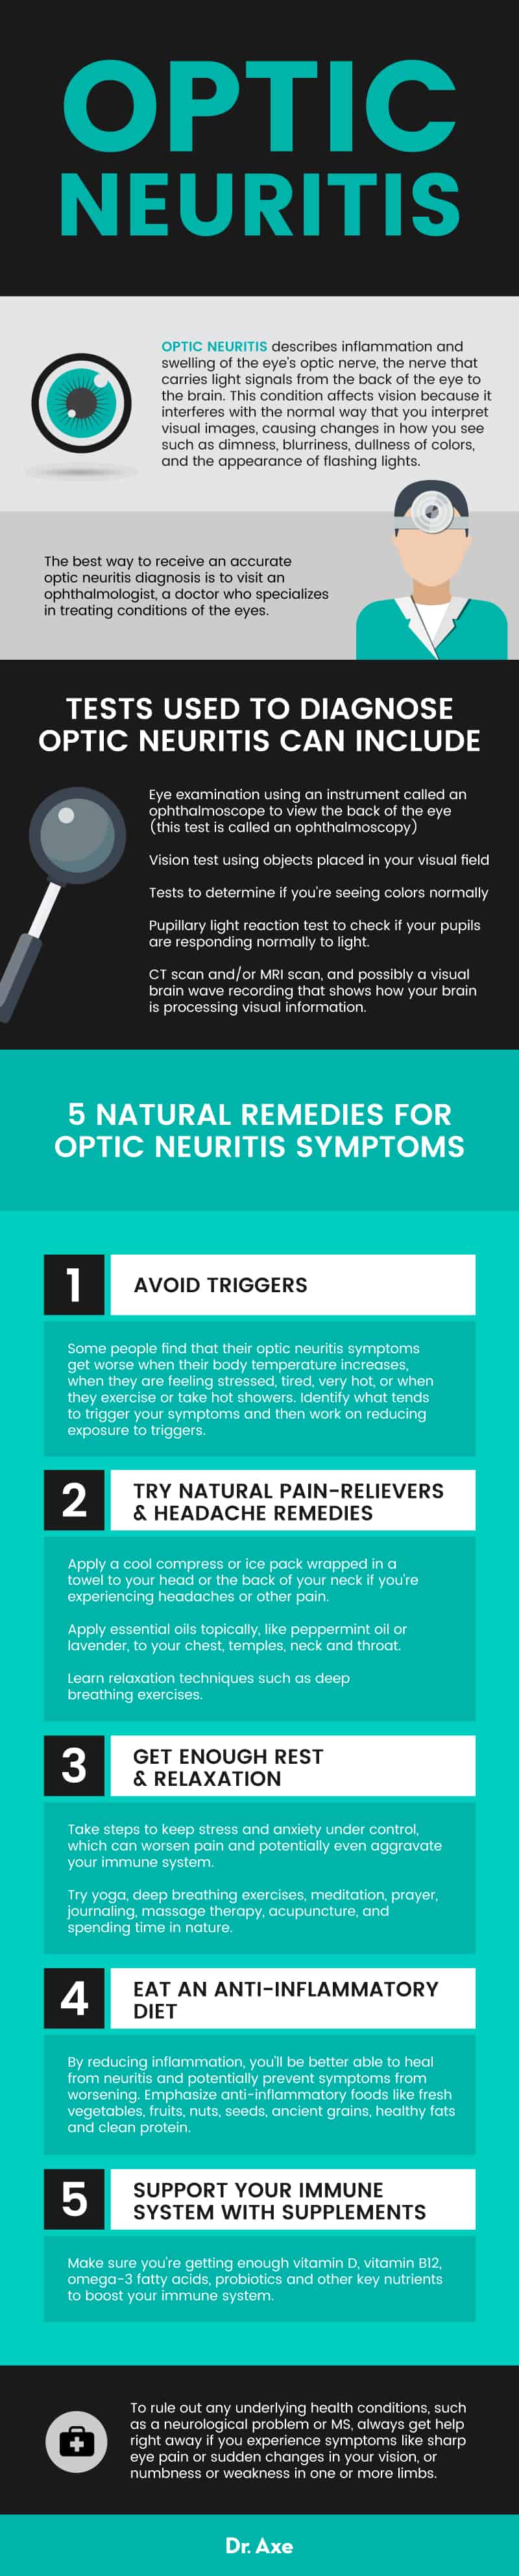 Optic neuritis treatment - Dr. Axe